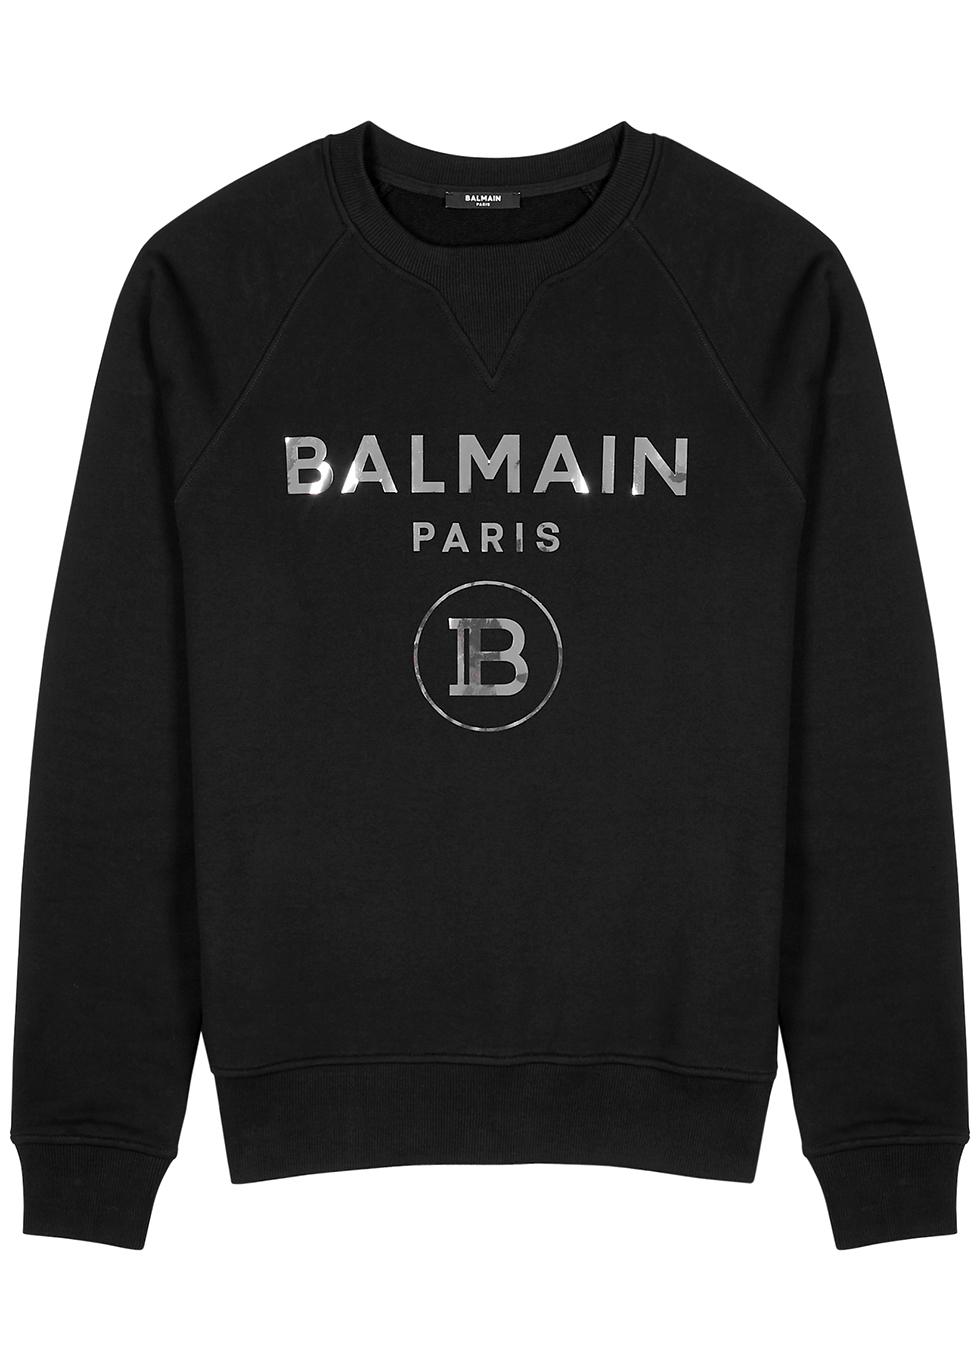 Balmain Black Logo Cotton Sweatshirt for Men - Lyst